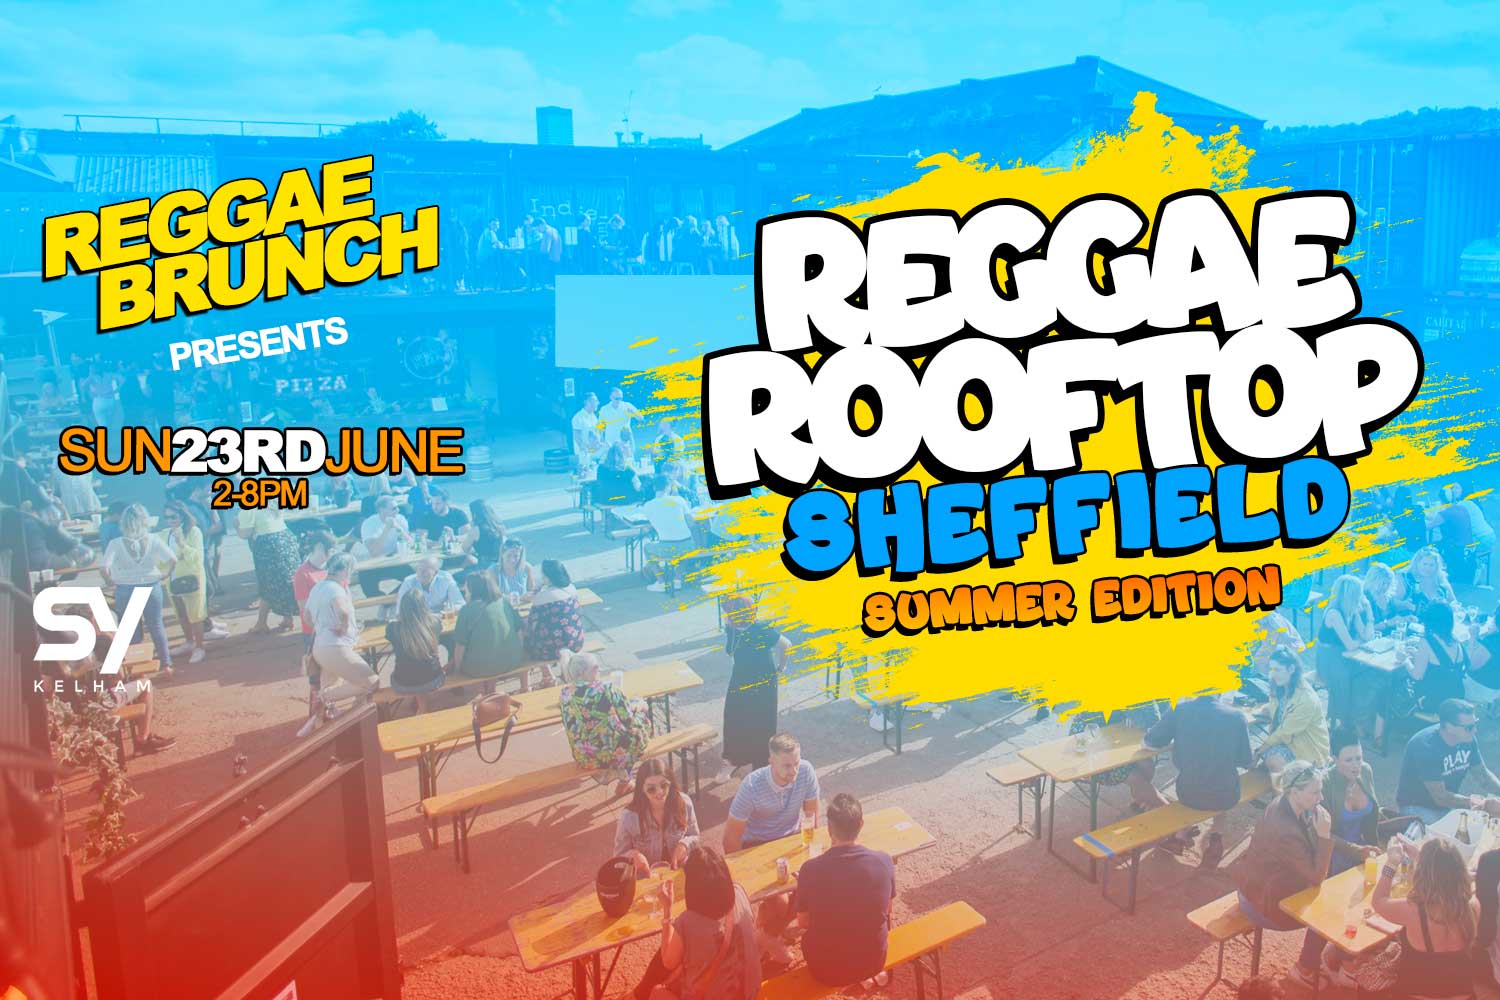 Sun, 23rd June | Reggae Rooftop Sheffield